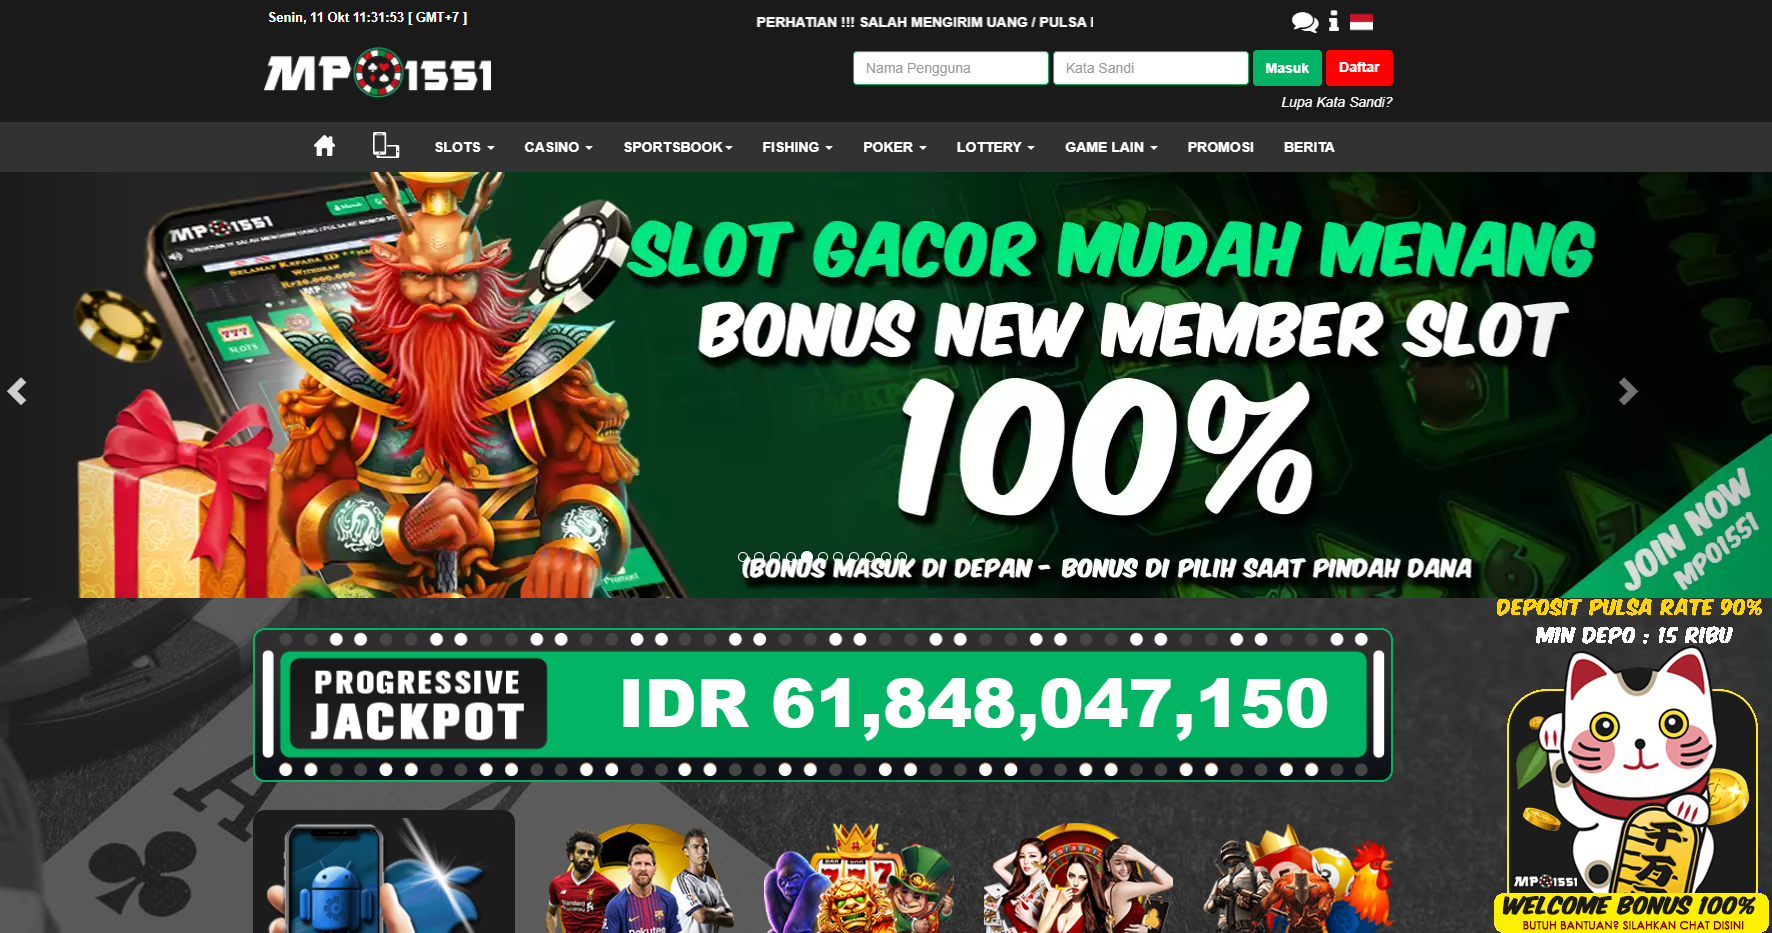 MPO1551 Situs Judi Slot Online Mpo Deposit Dana Terpercaya